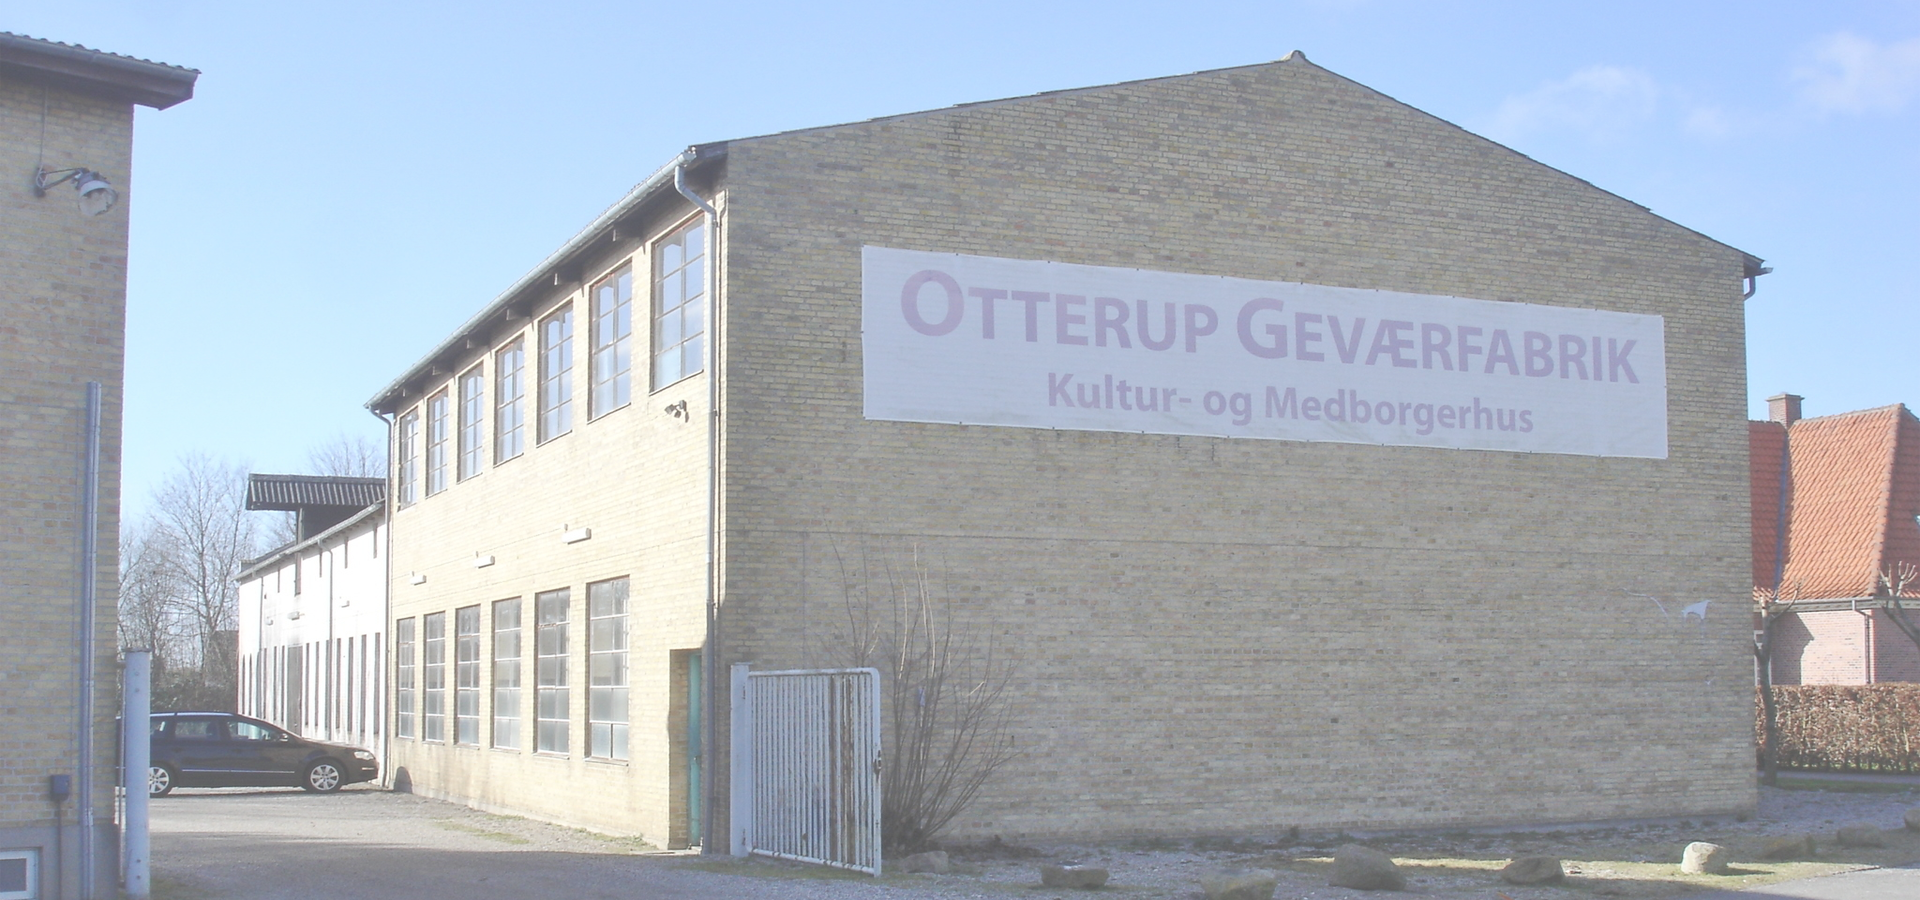 <b>Otterup, Southern Denmark Region, Denmark</b>